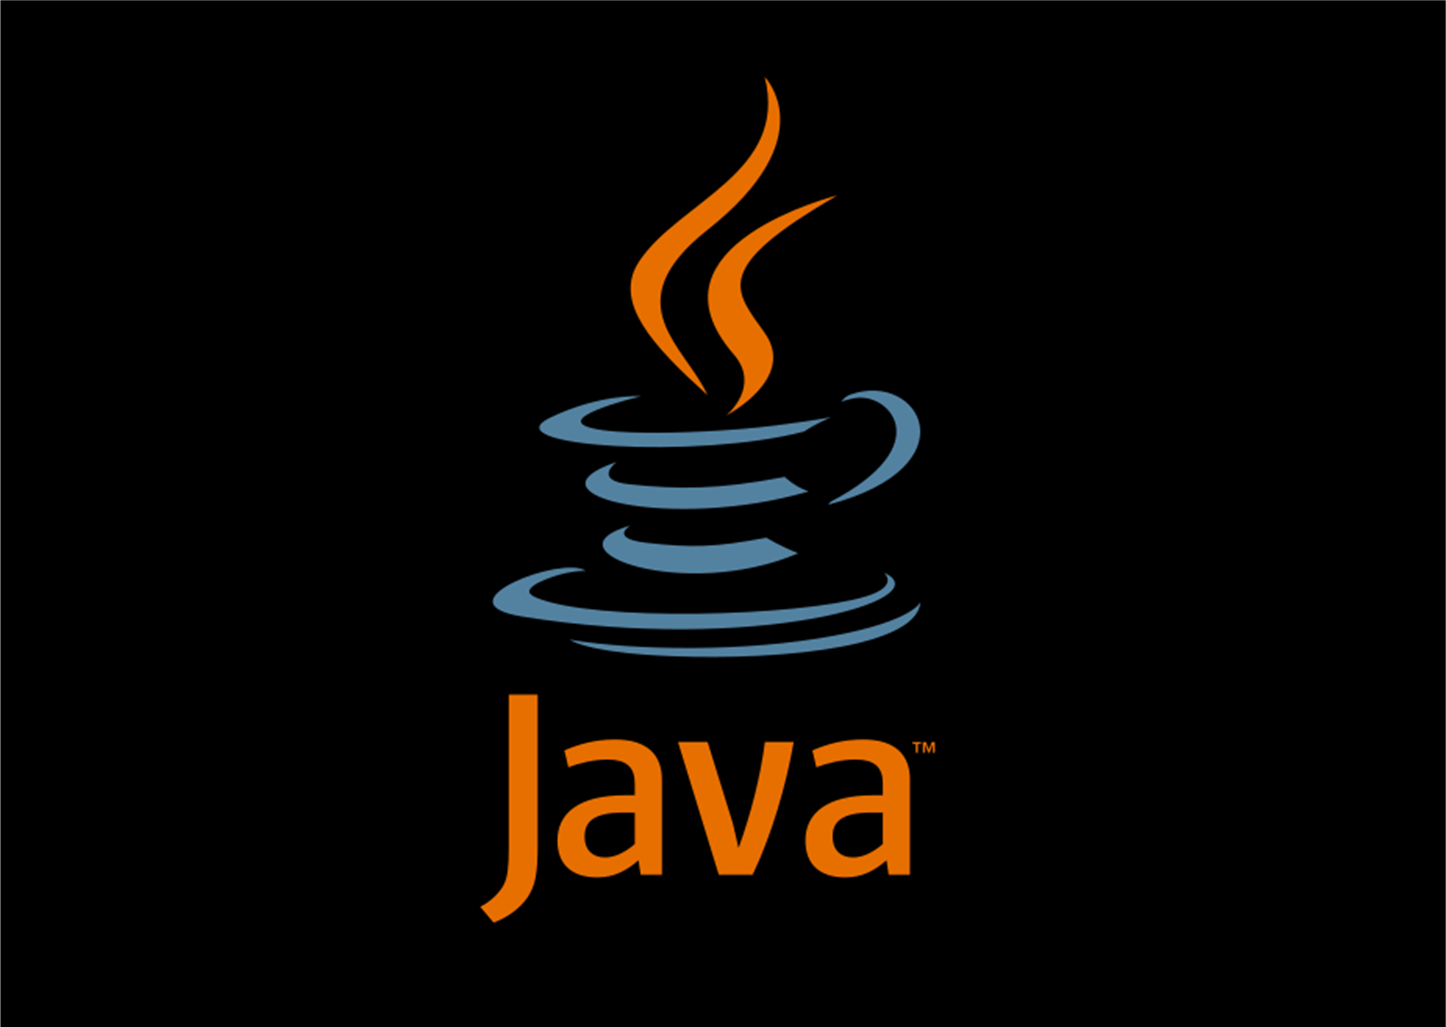 Java (.EPS) vector logo download free